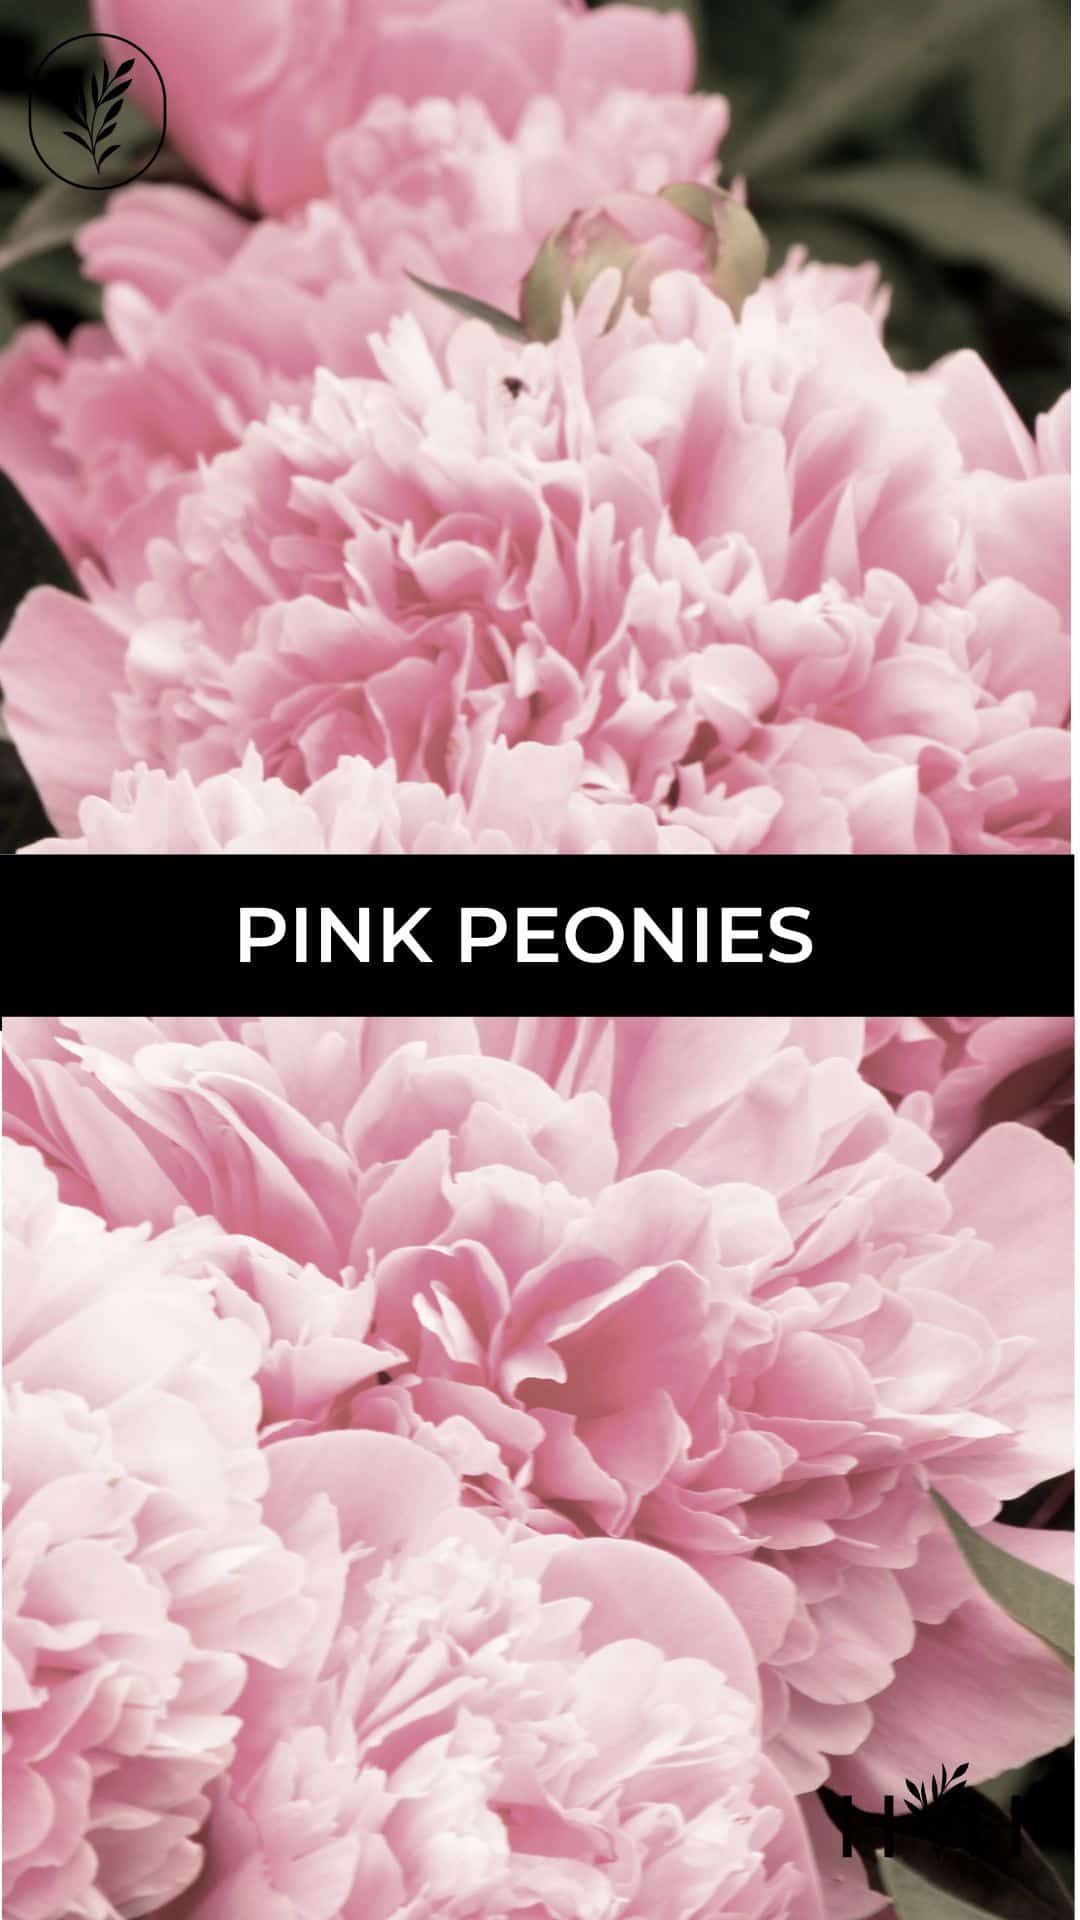 Pink peonies via @home4theharvest